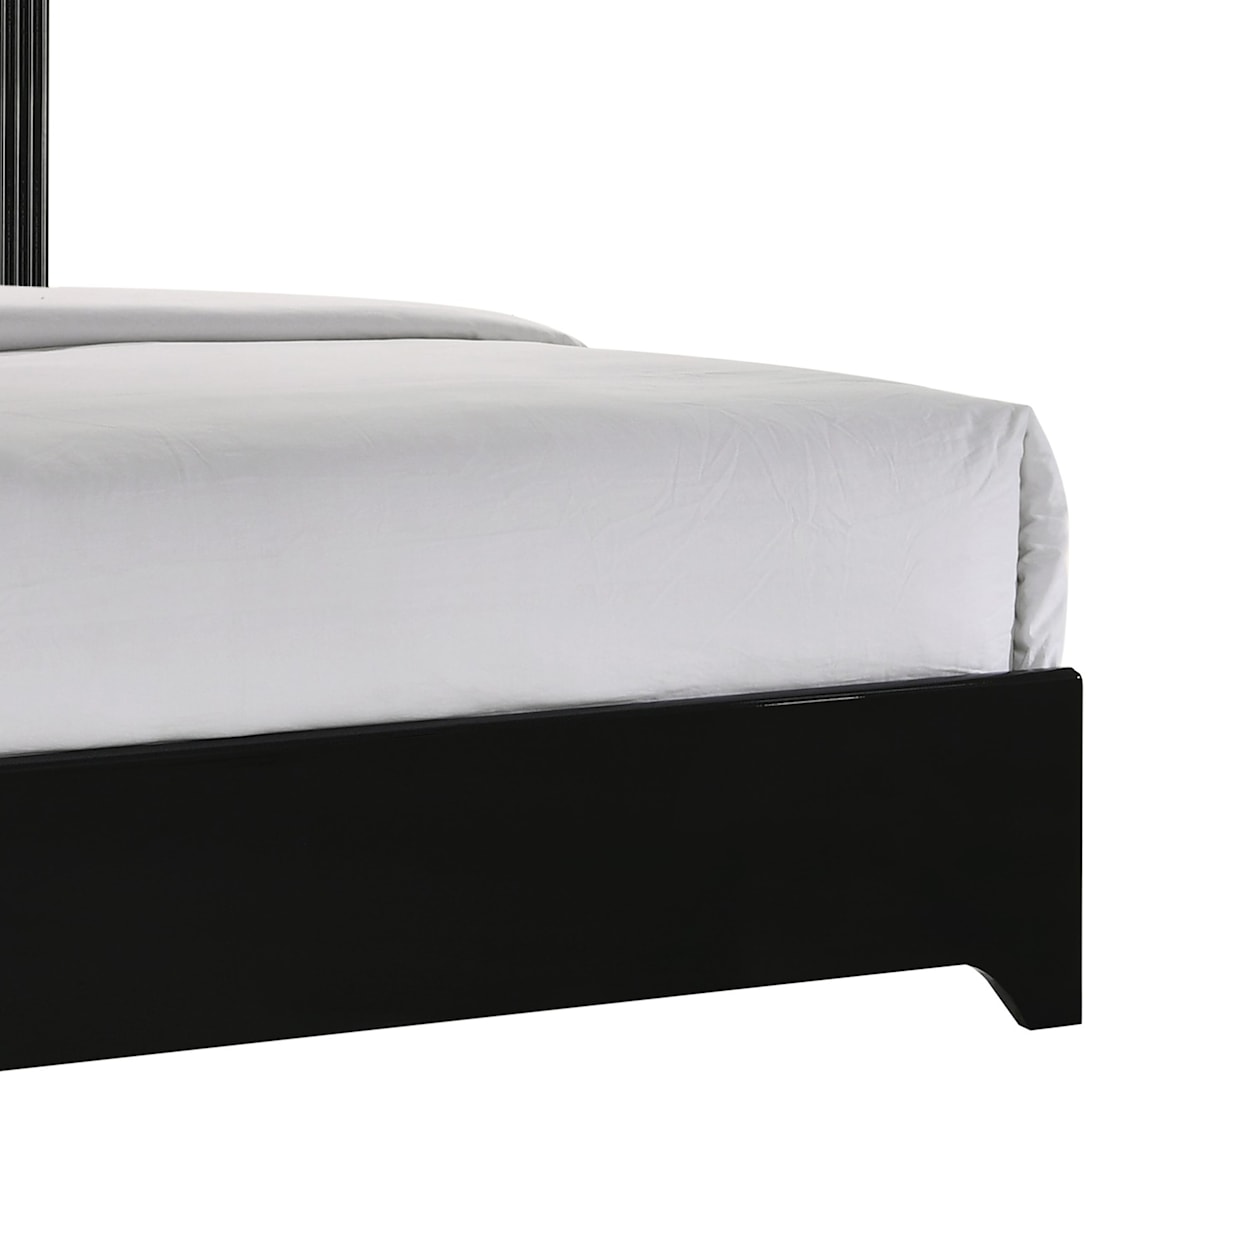 Global Furniture Aspen King Panel Bed